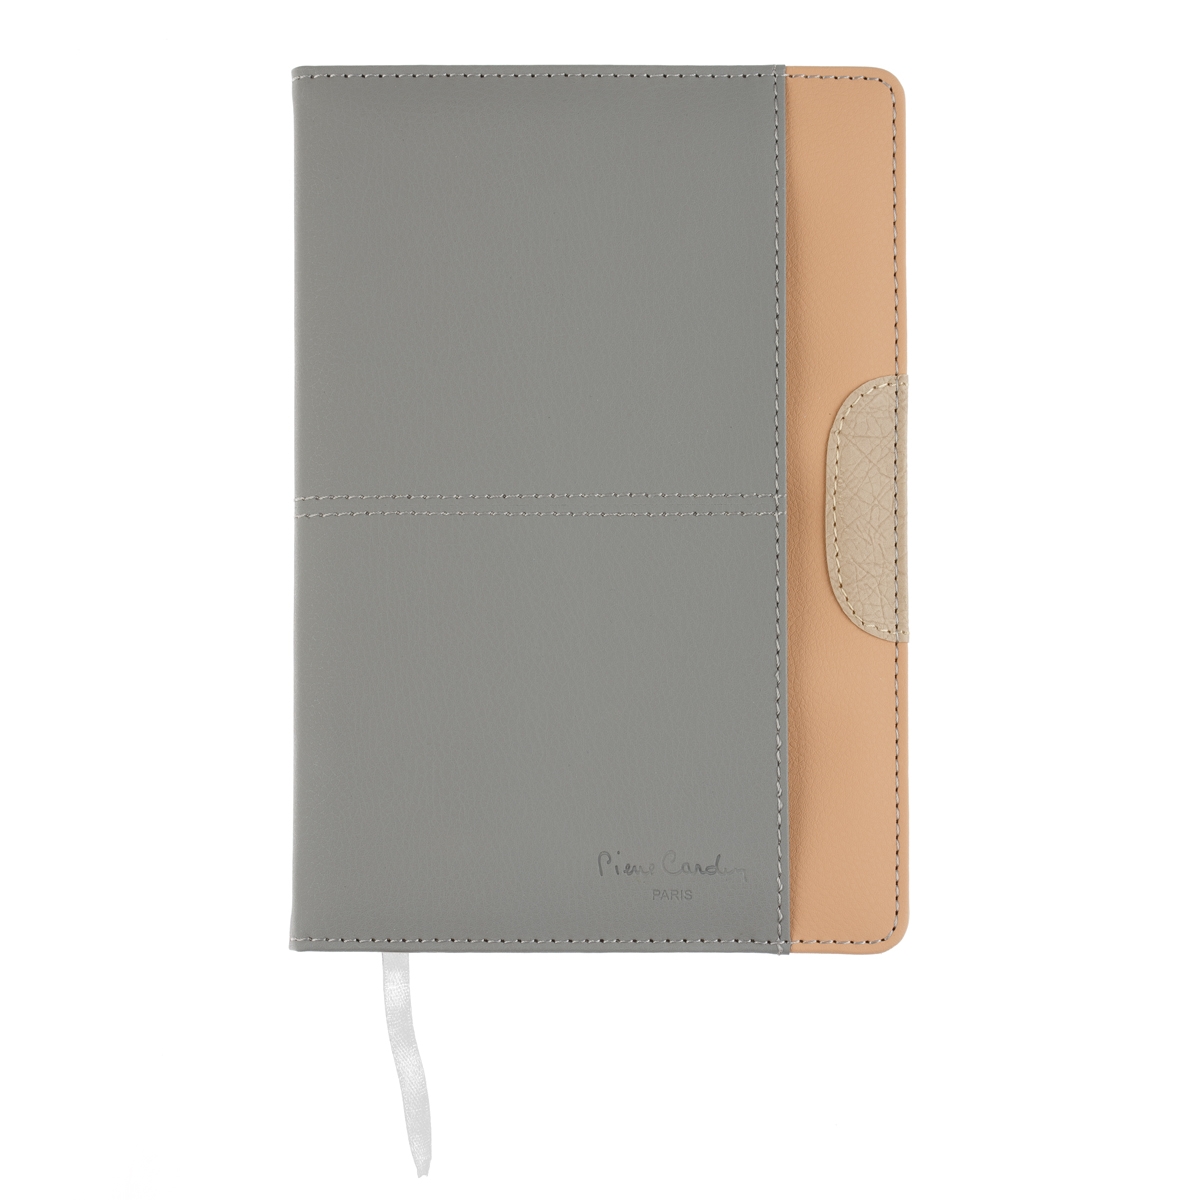 Записная книжка Pierre Cardin серая, 14 х 20,5 см, серый